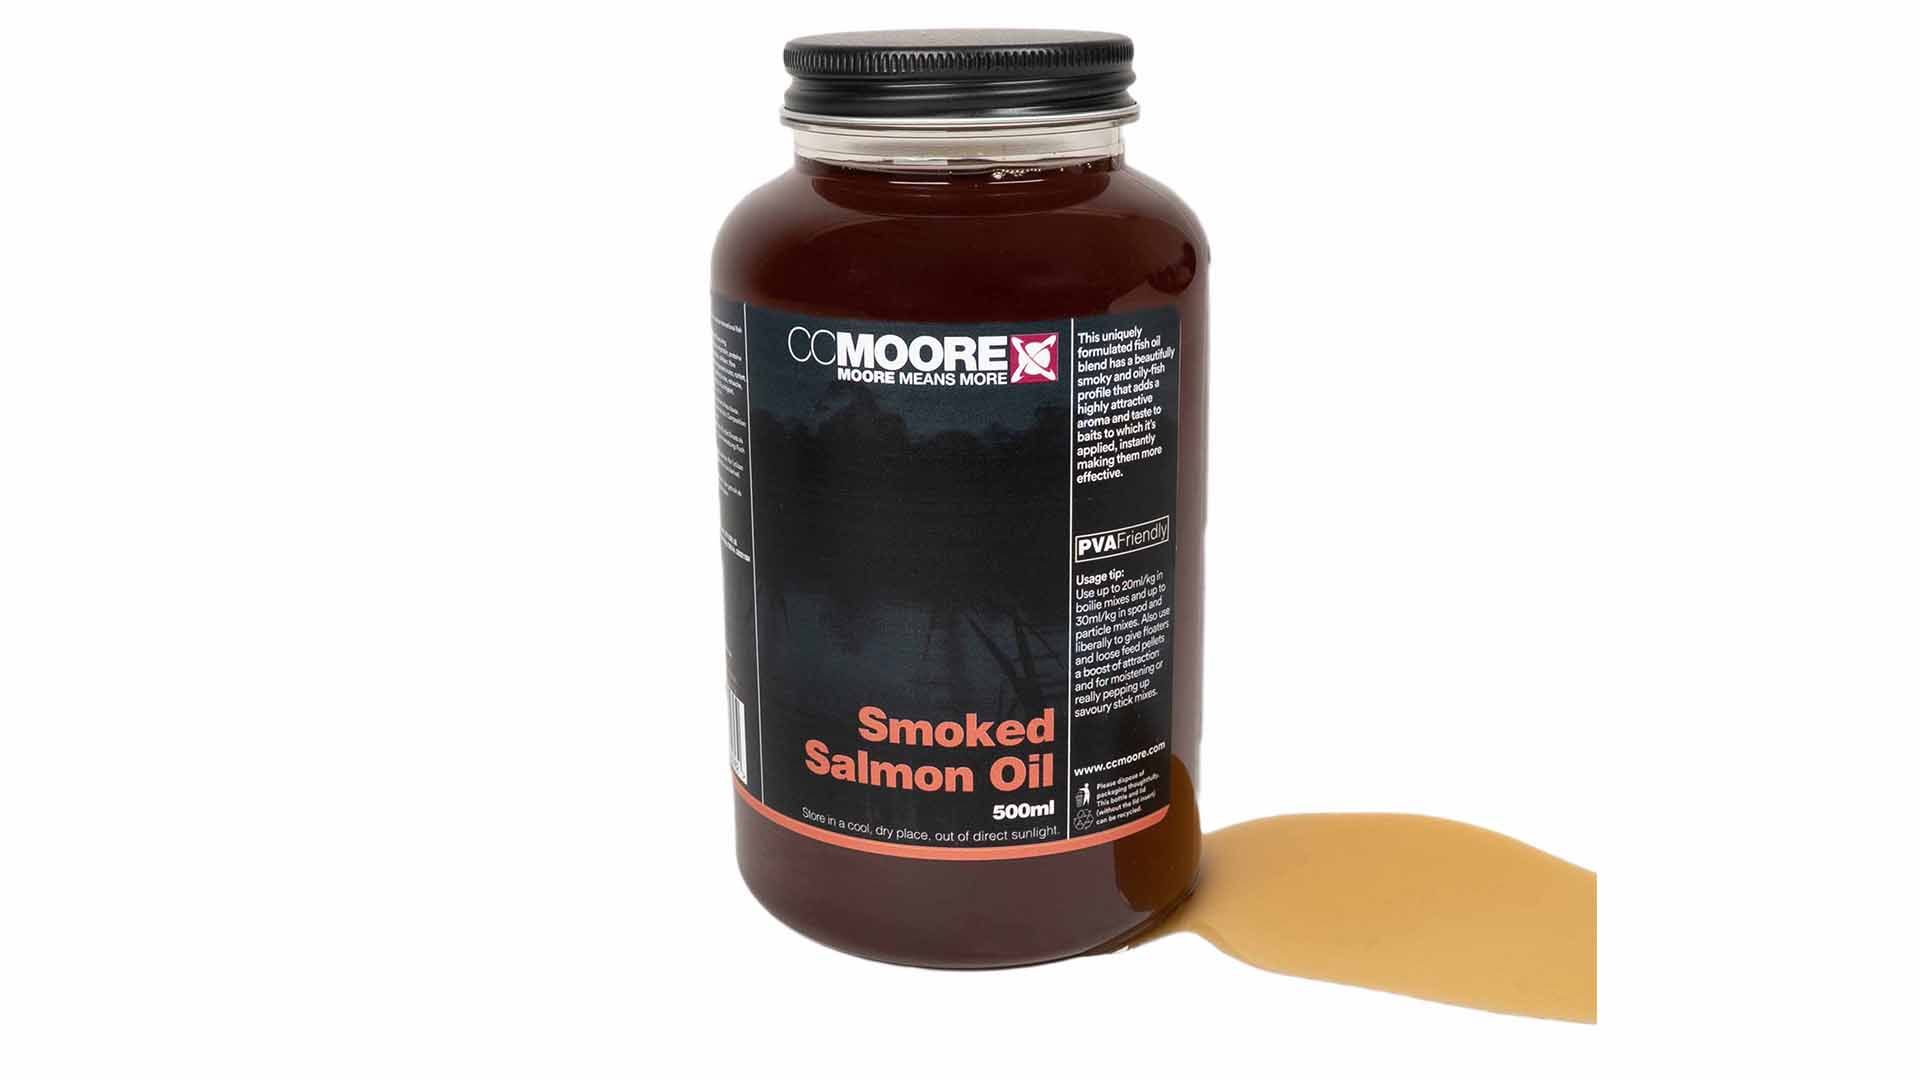 CC Moore oleje 500ml - Smoked Salmon oil